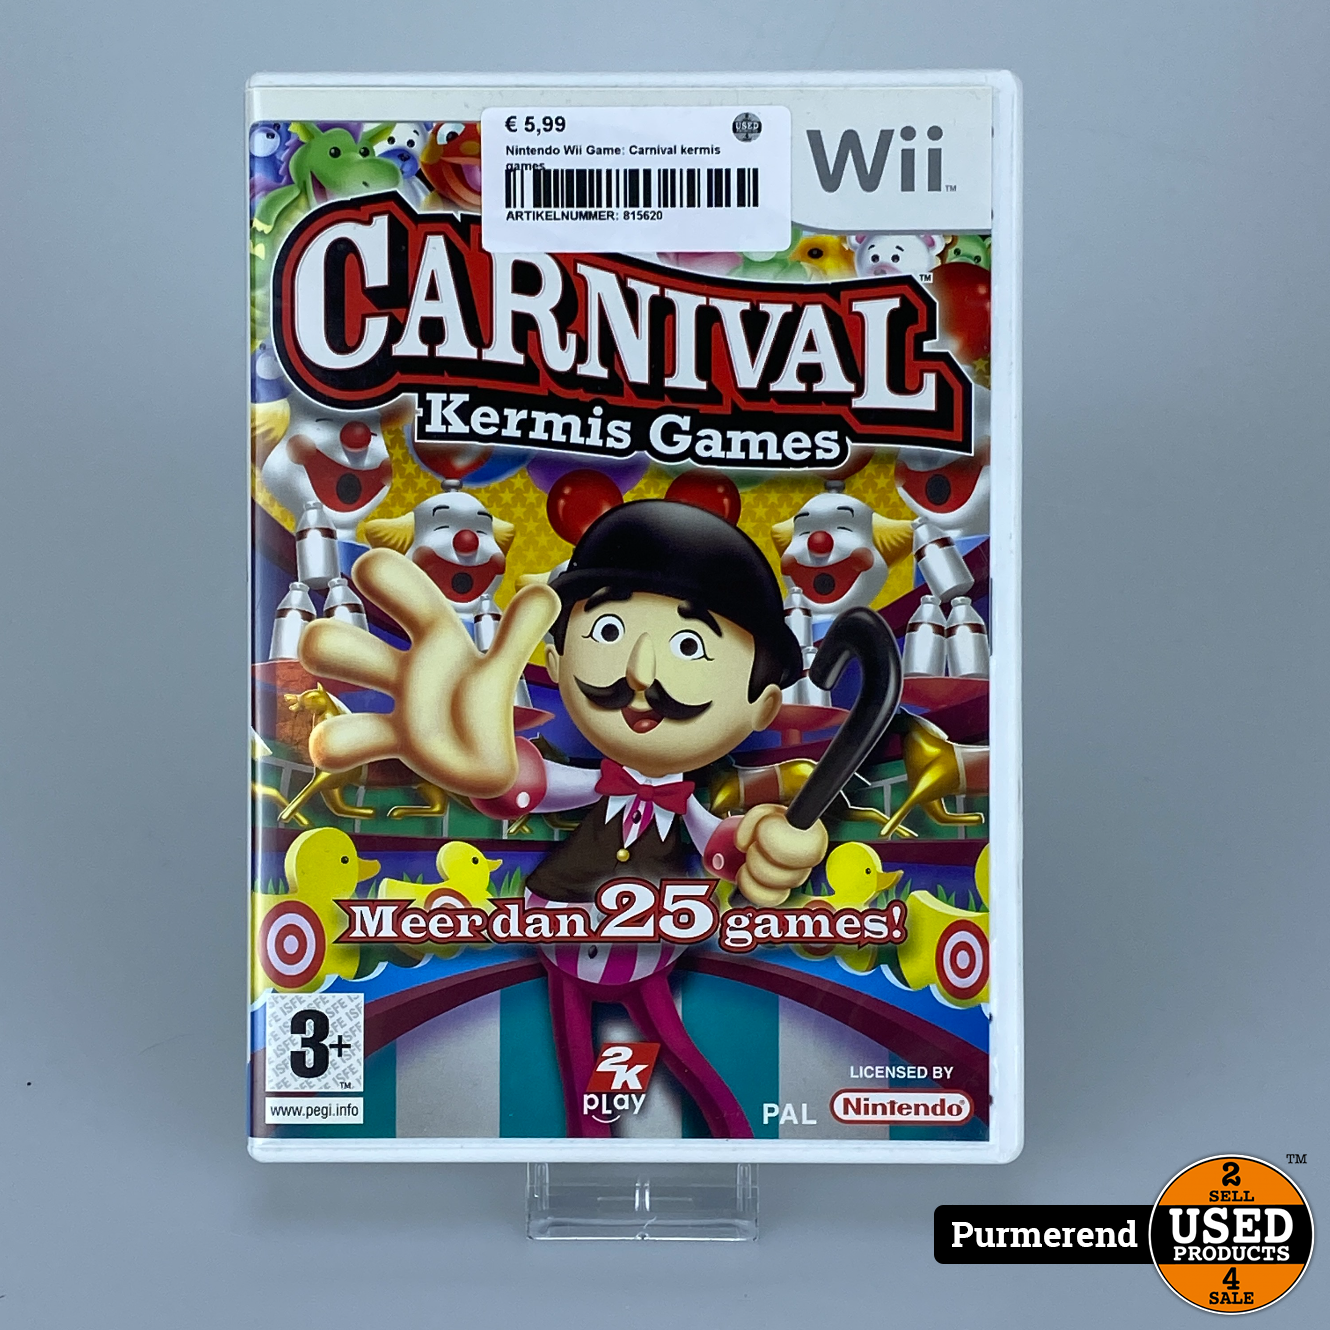 Aannemelijk Reactor extract Nintendo Wii Game: Carnival kermis games - Used Products Purmerend